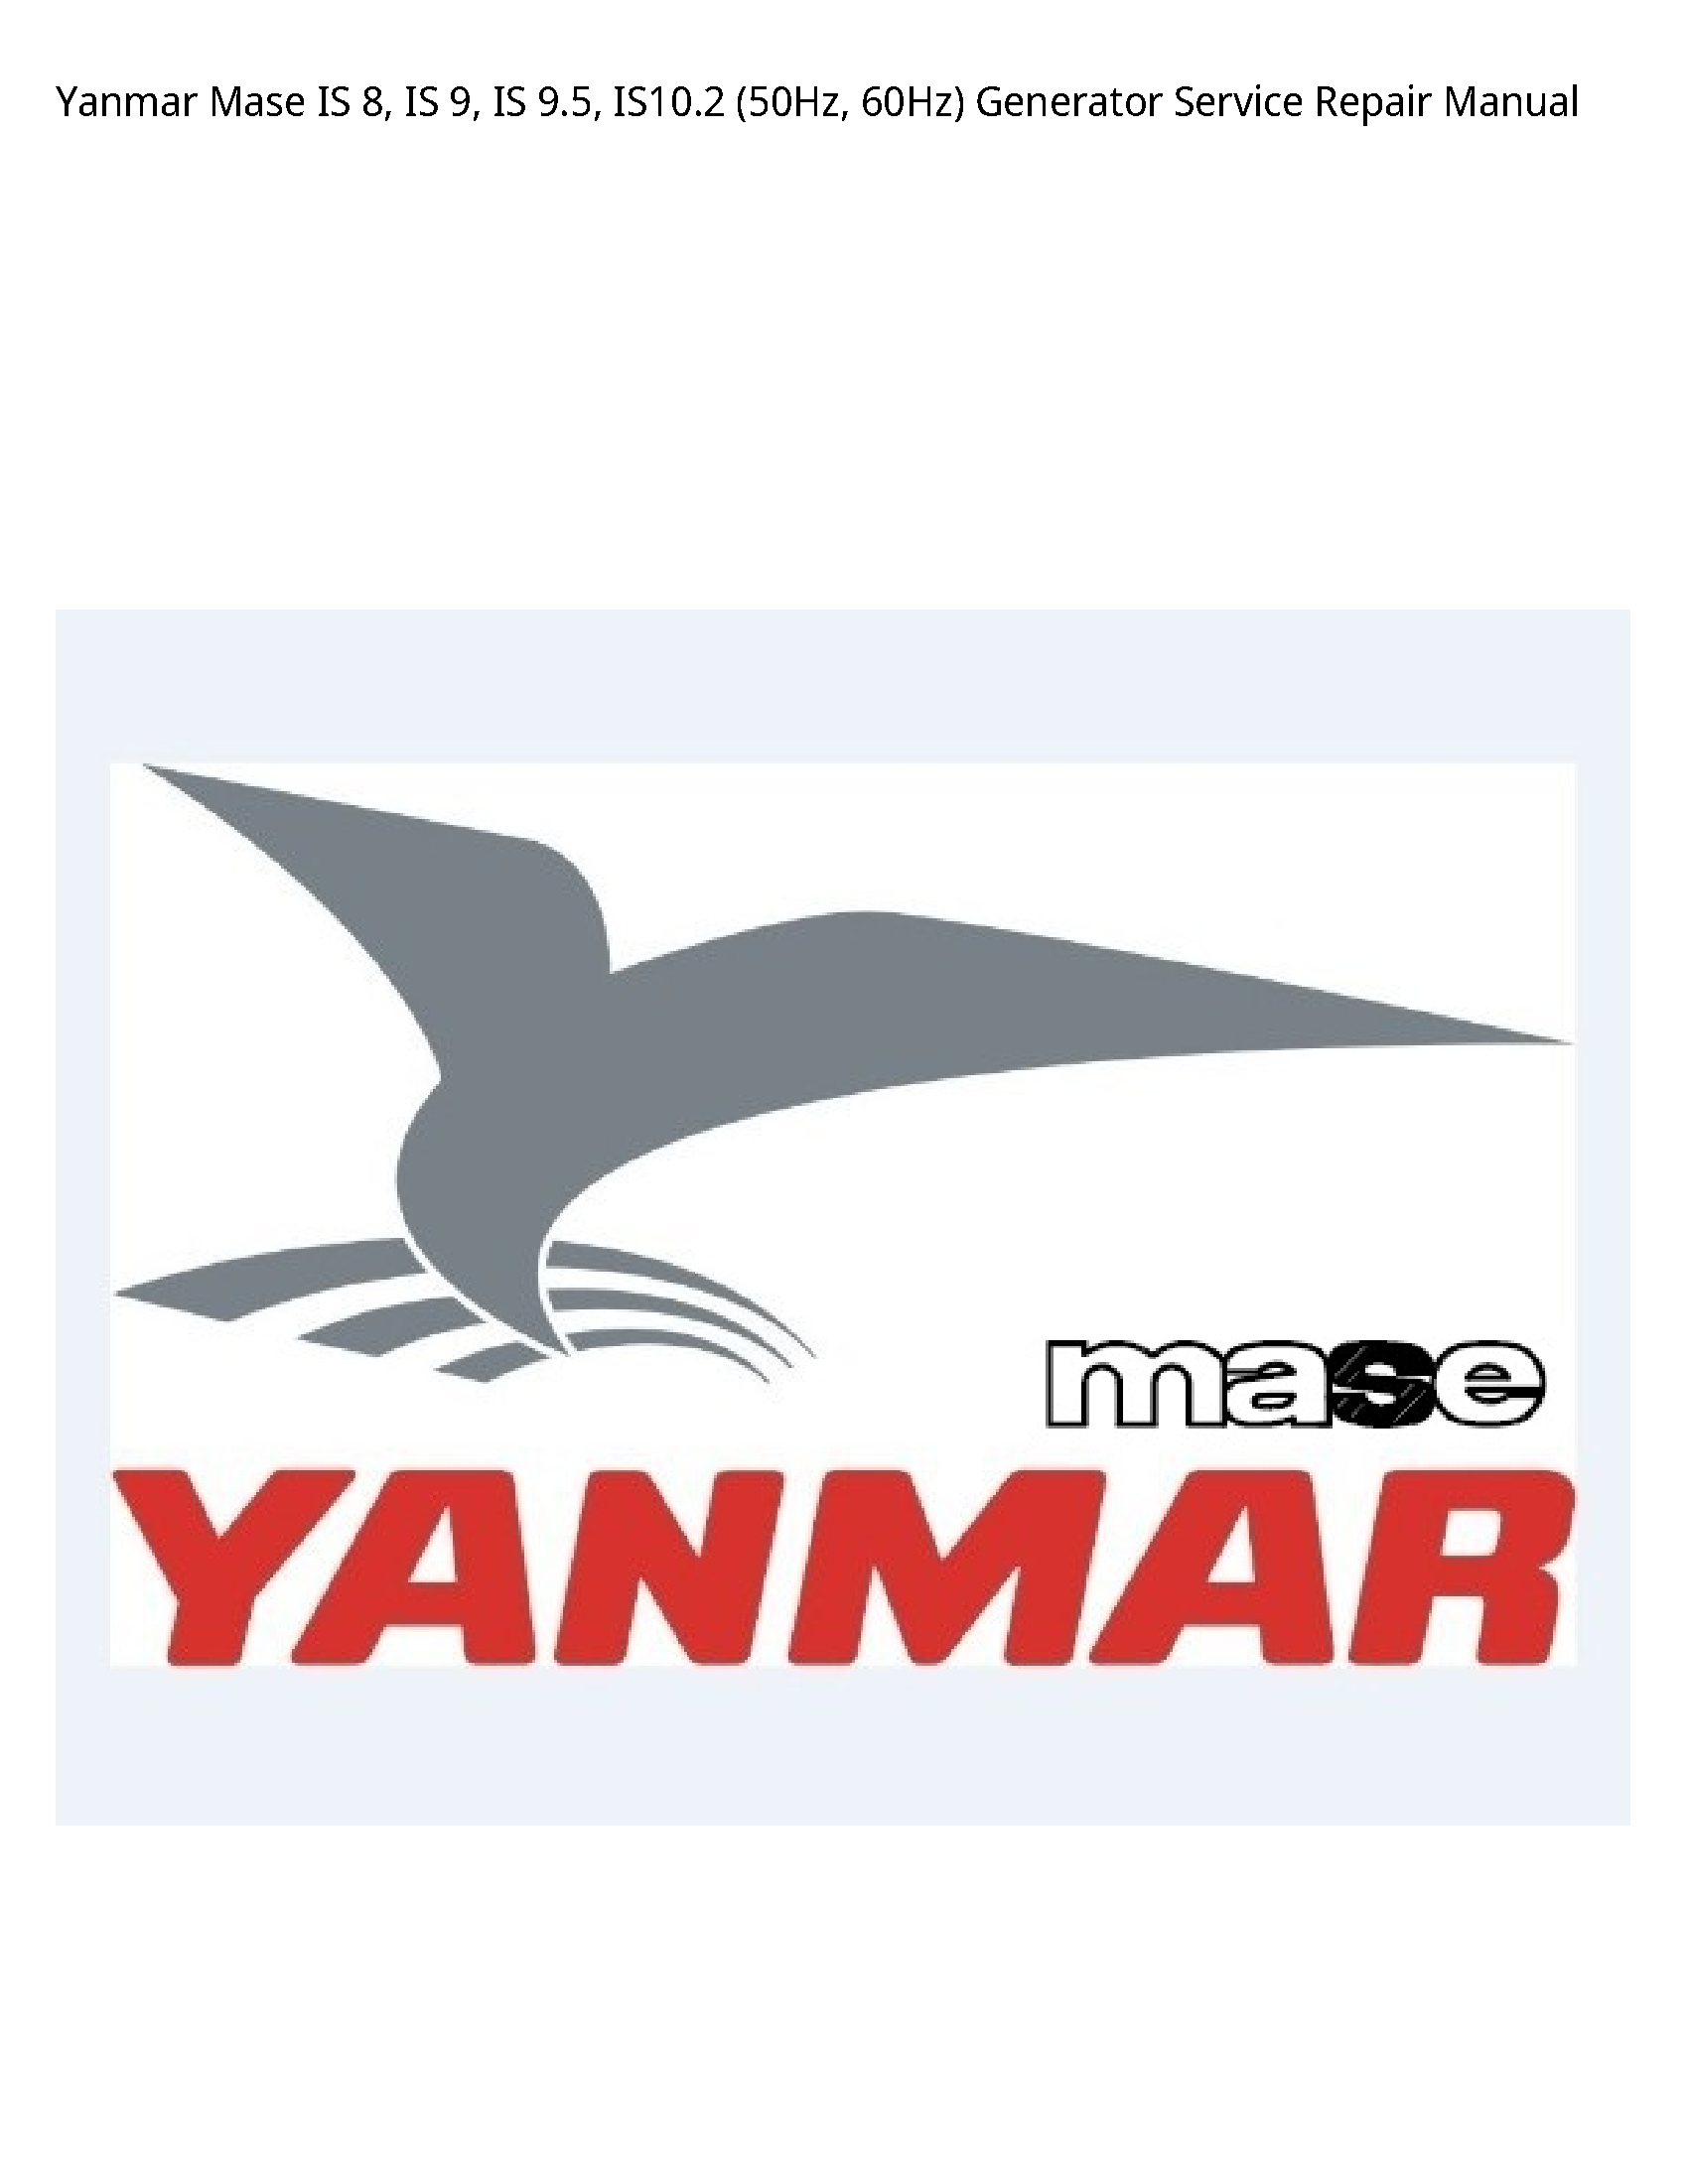 Yanmar 8 Mase IS IS IS Generator manual